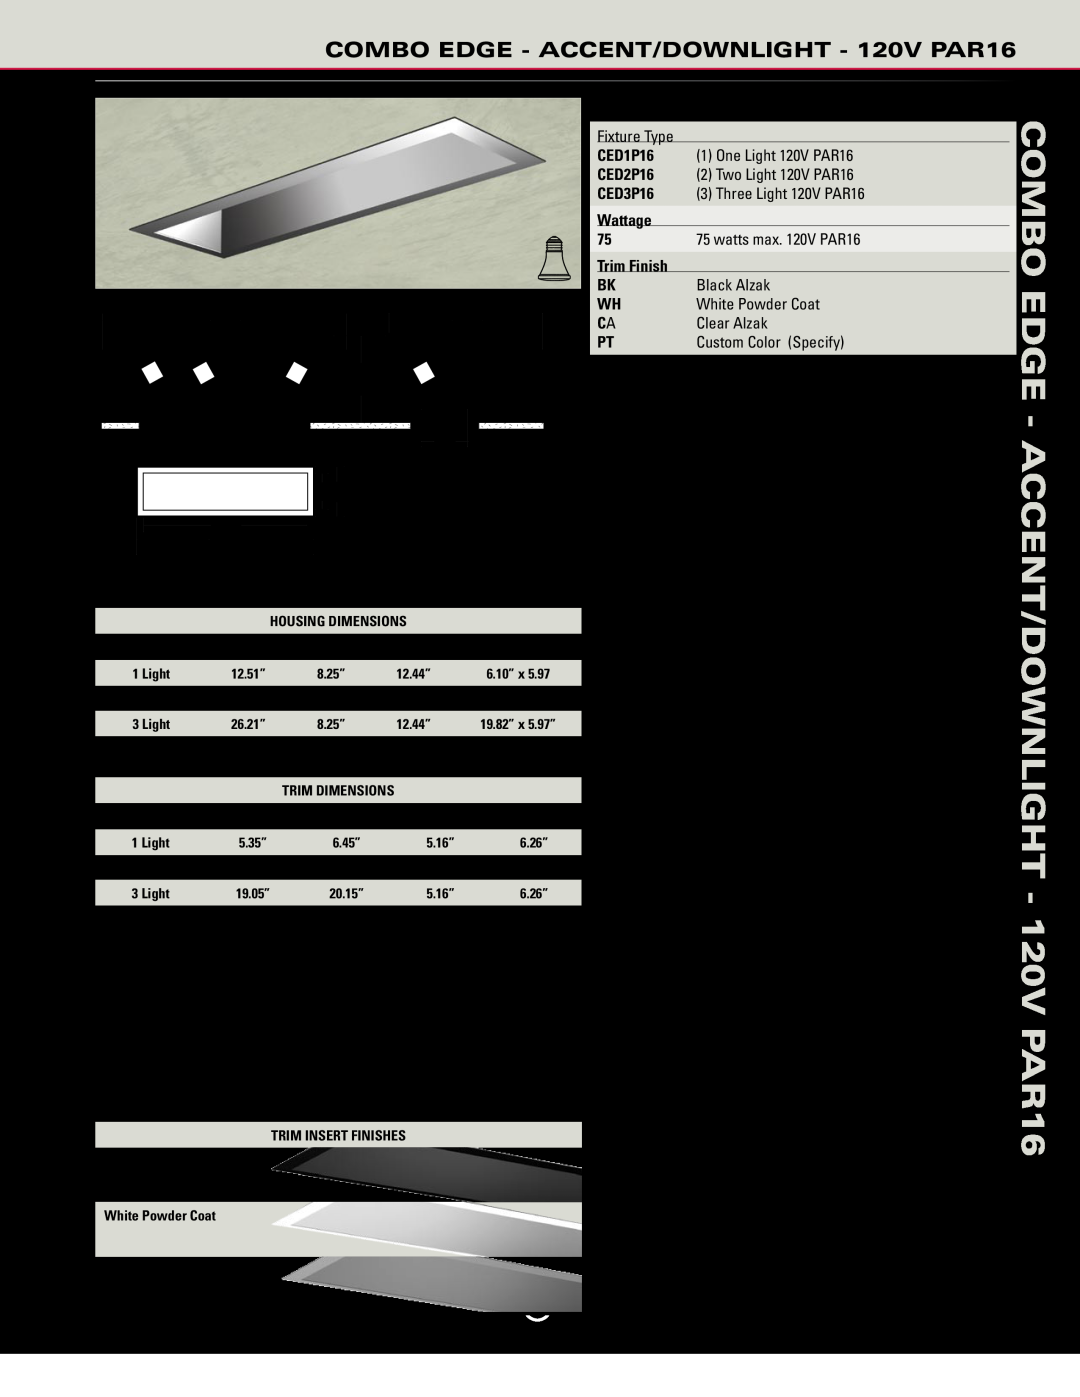 Cooper Lighting Combo Edge manual COMBO EDGE - ACCENT/DOWNLIGHT - 120V PAR16, CED3P16-75-CA 